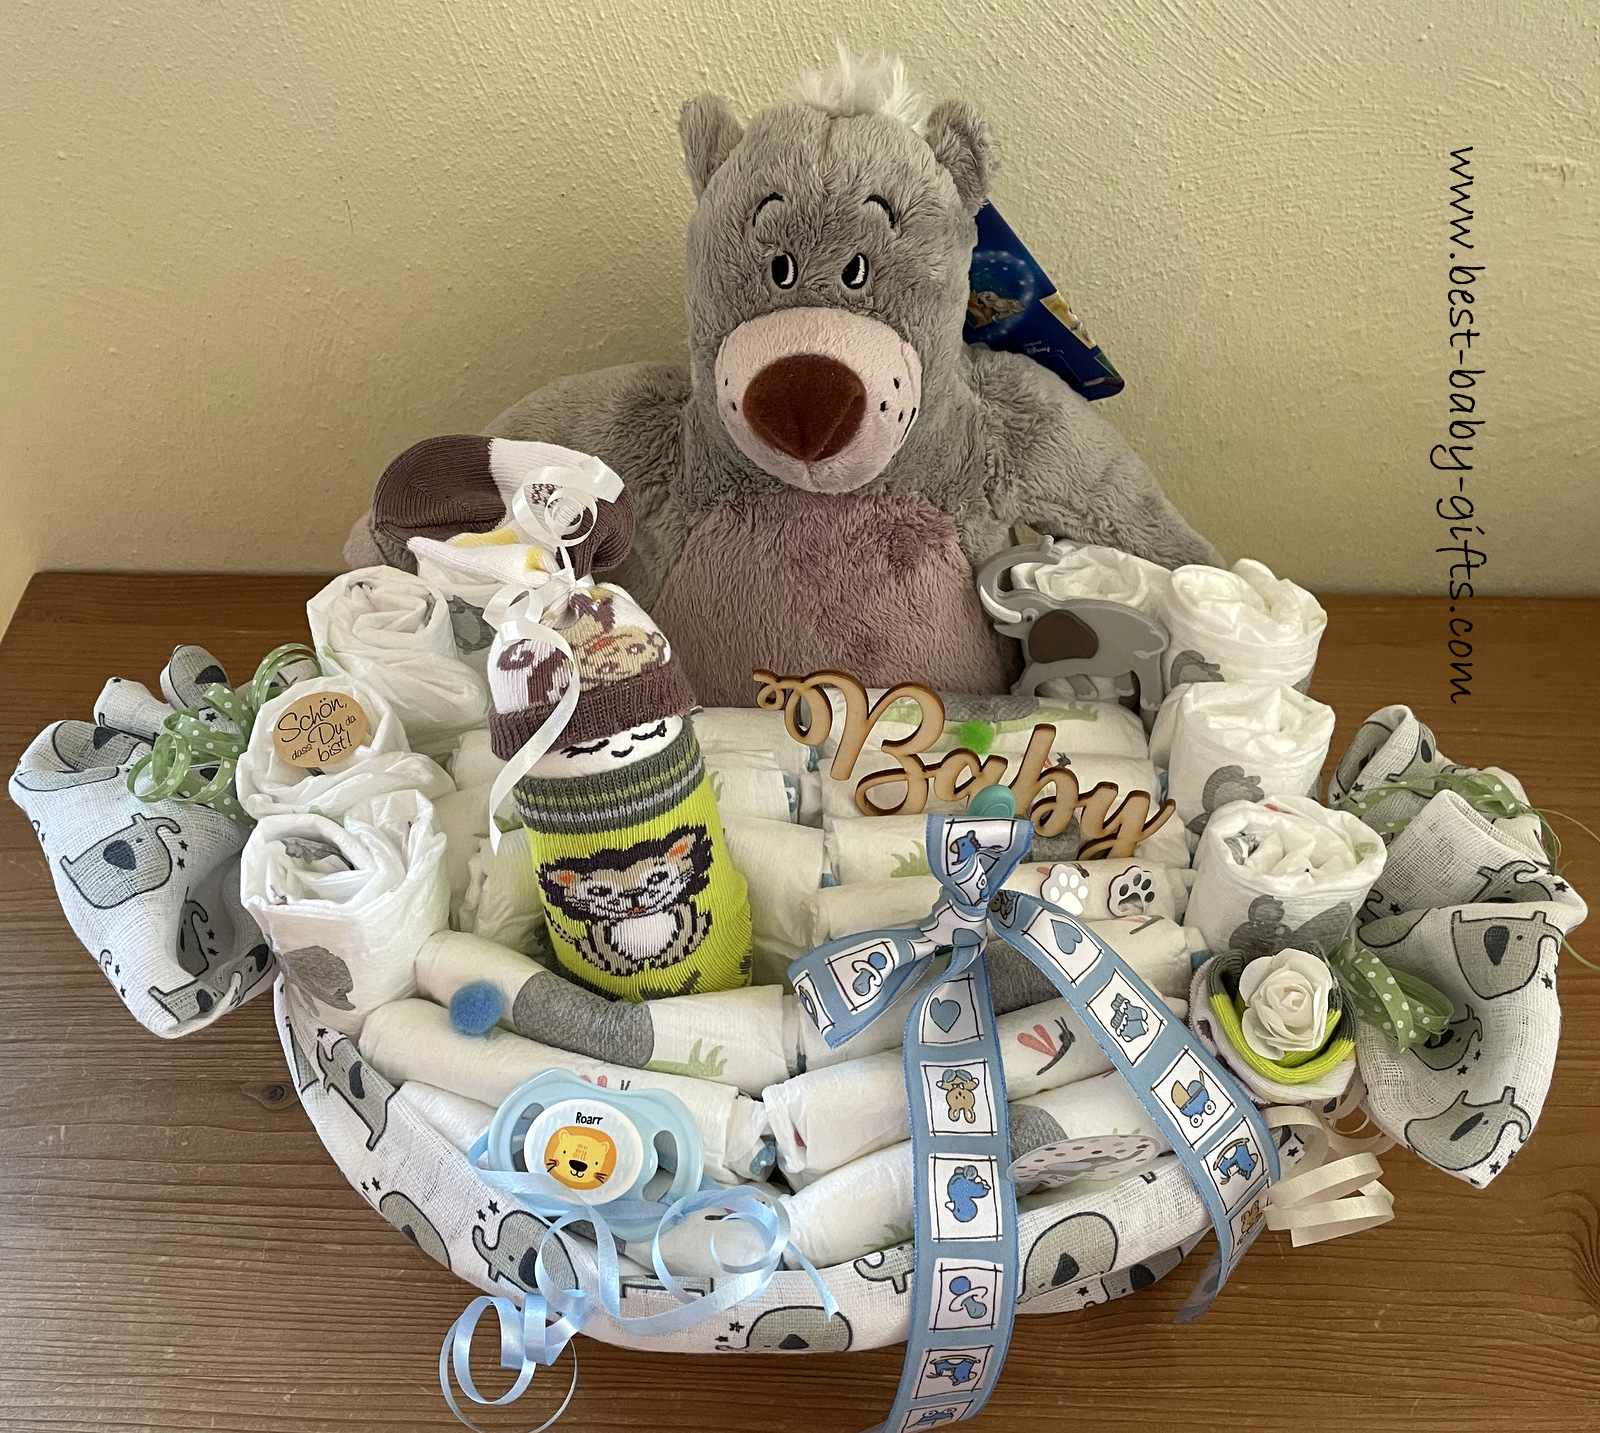 Special Newborn Baby Gifts | tyello.com